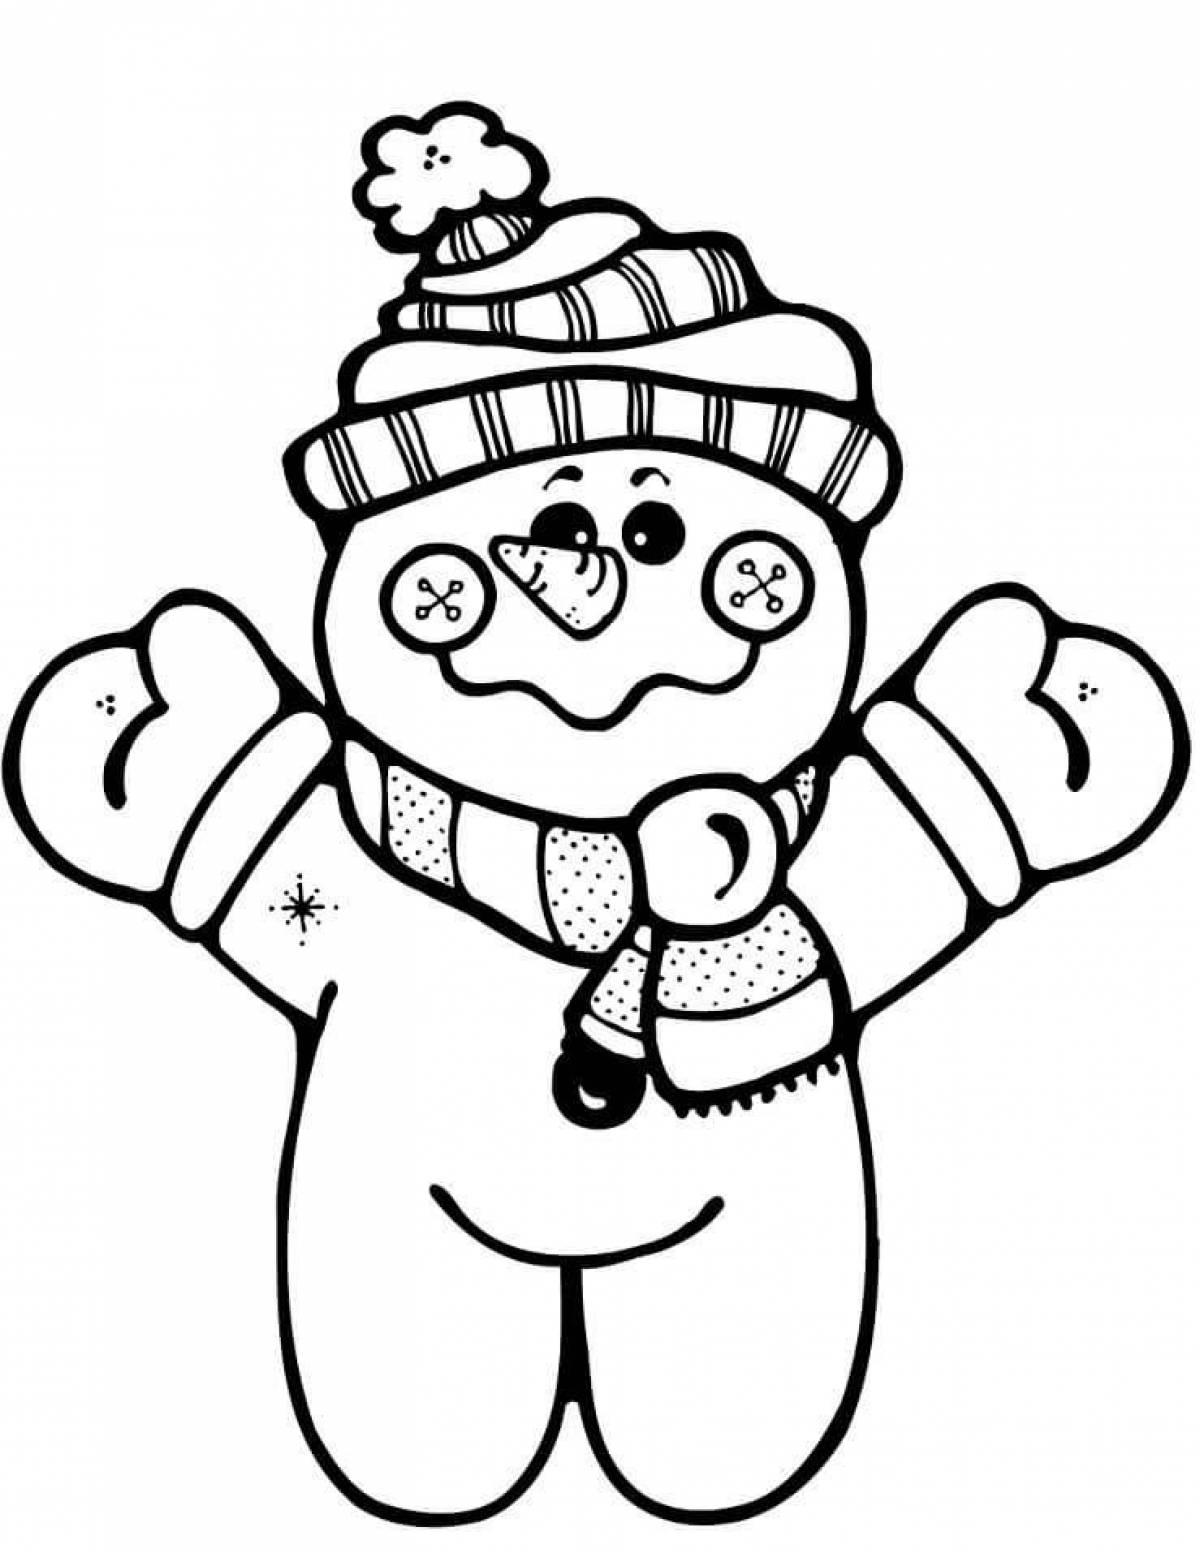 Shiny snowmen coloring page